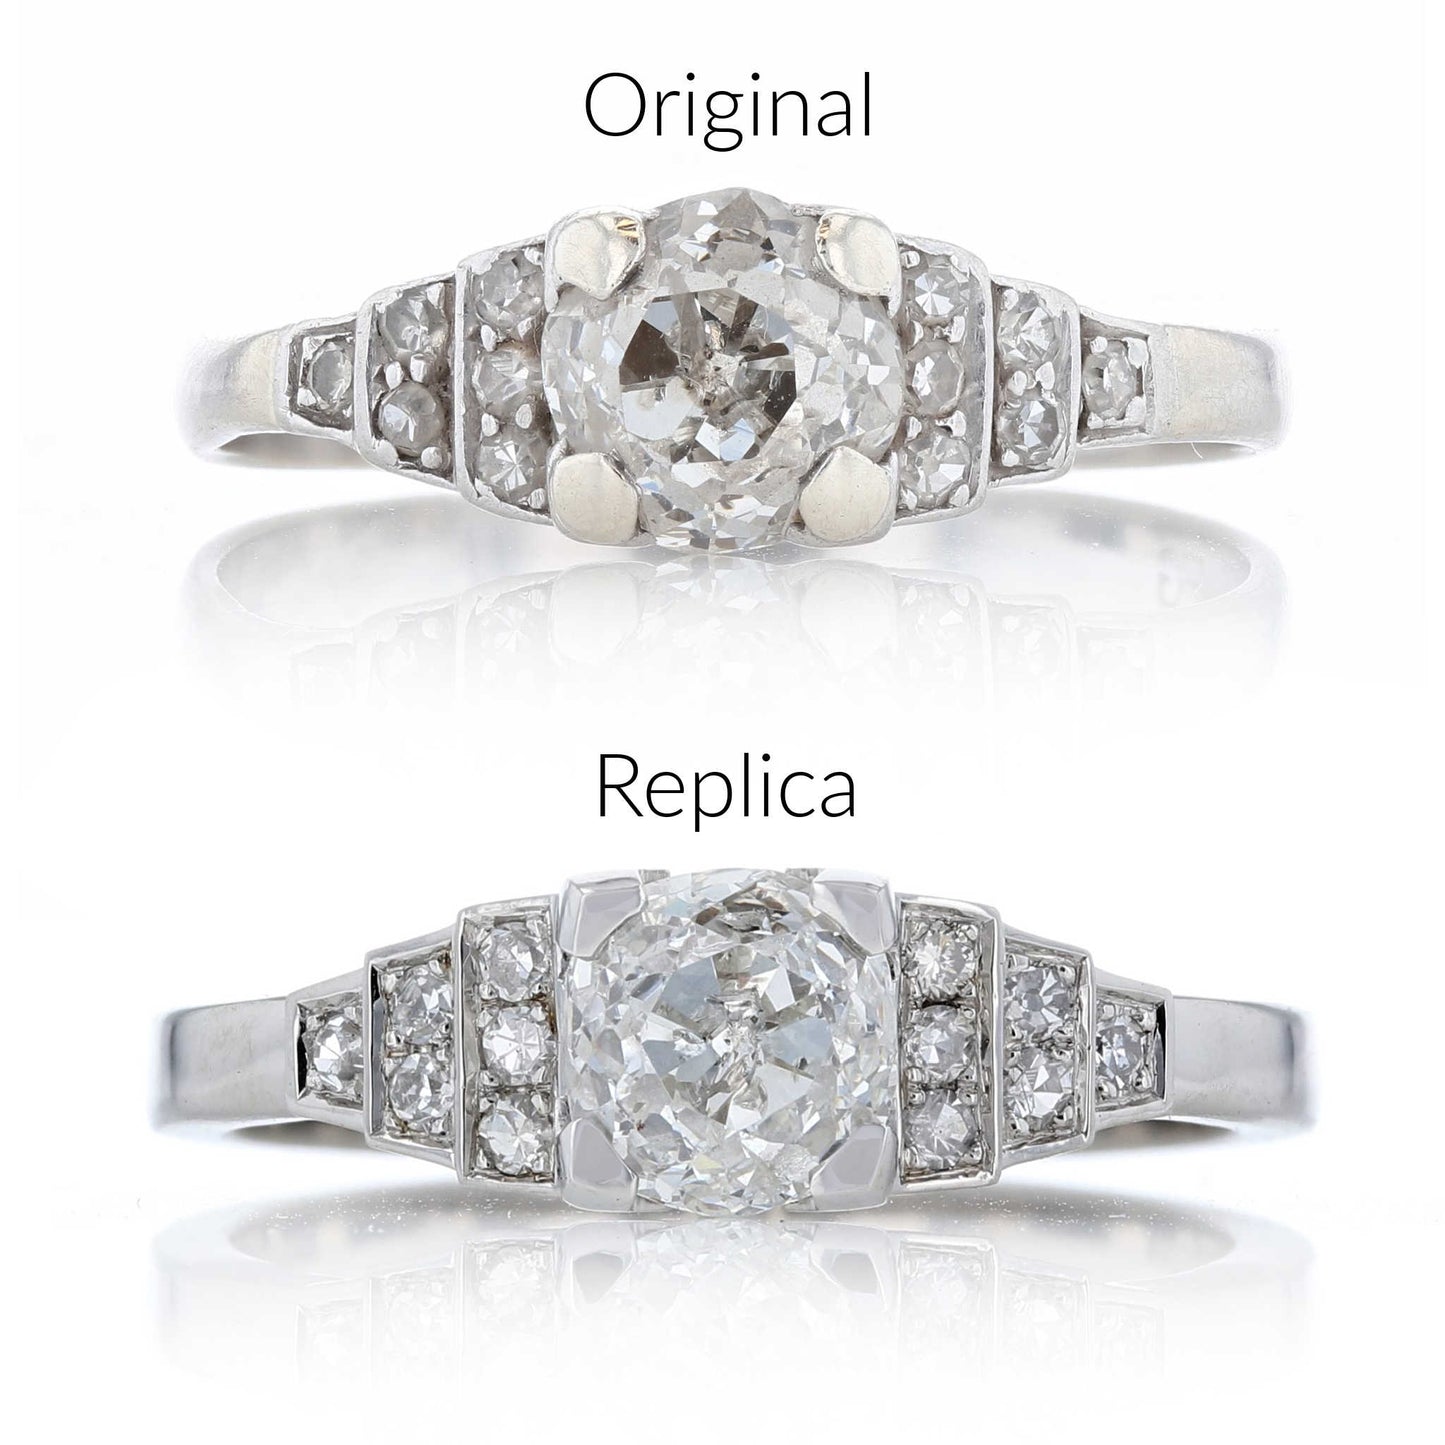 Platinum Geometric Art Deco Diamond Engagement Ring Replica with Original Ring Pictured Above